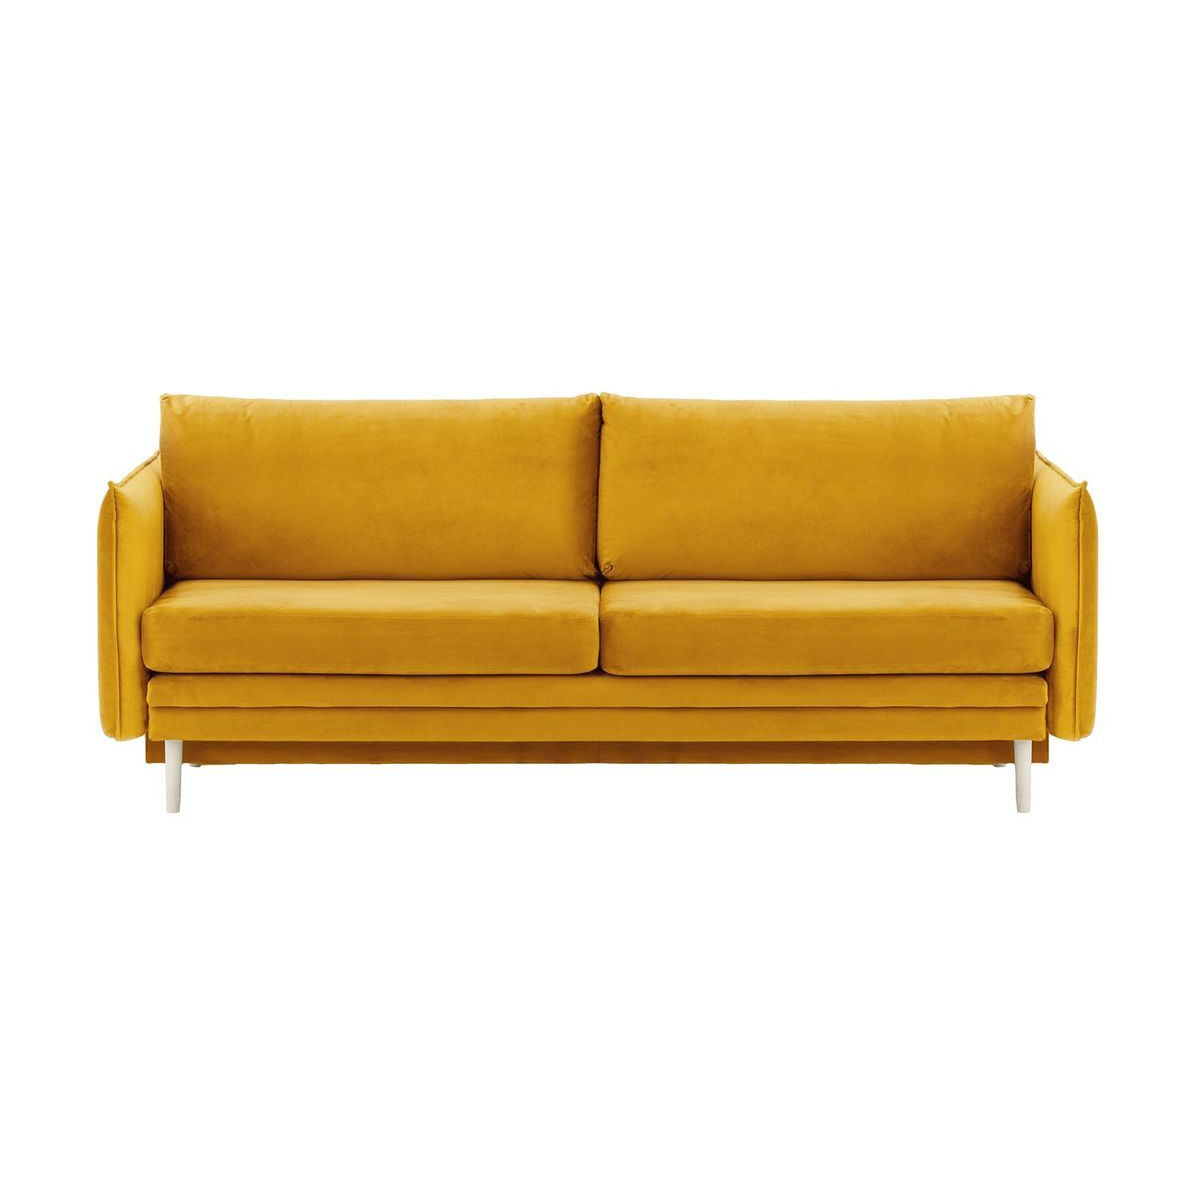 Nimbus Sofa Bed with Storage, mustard, Leg colour: white - image 1